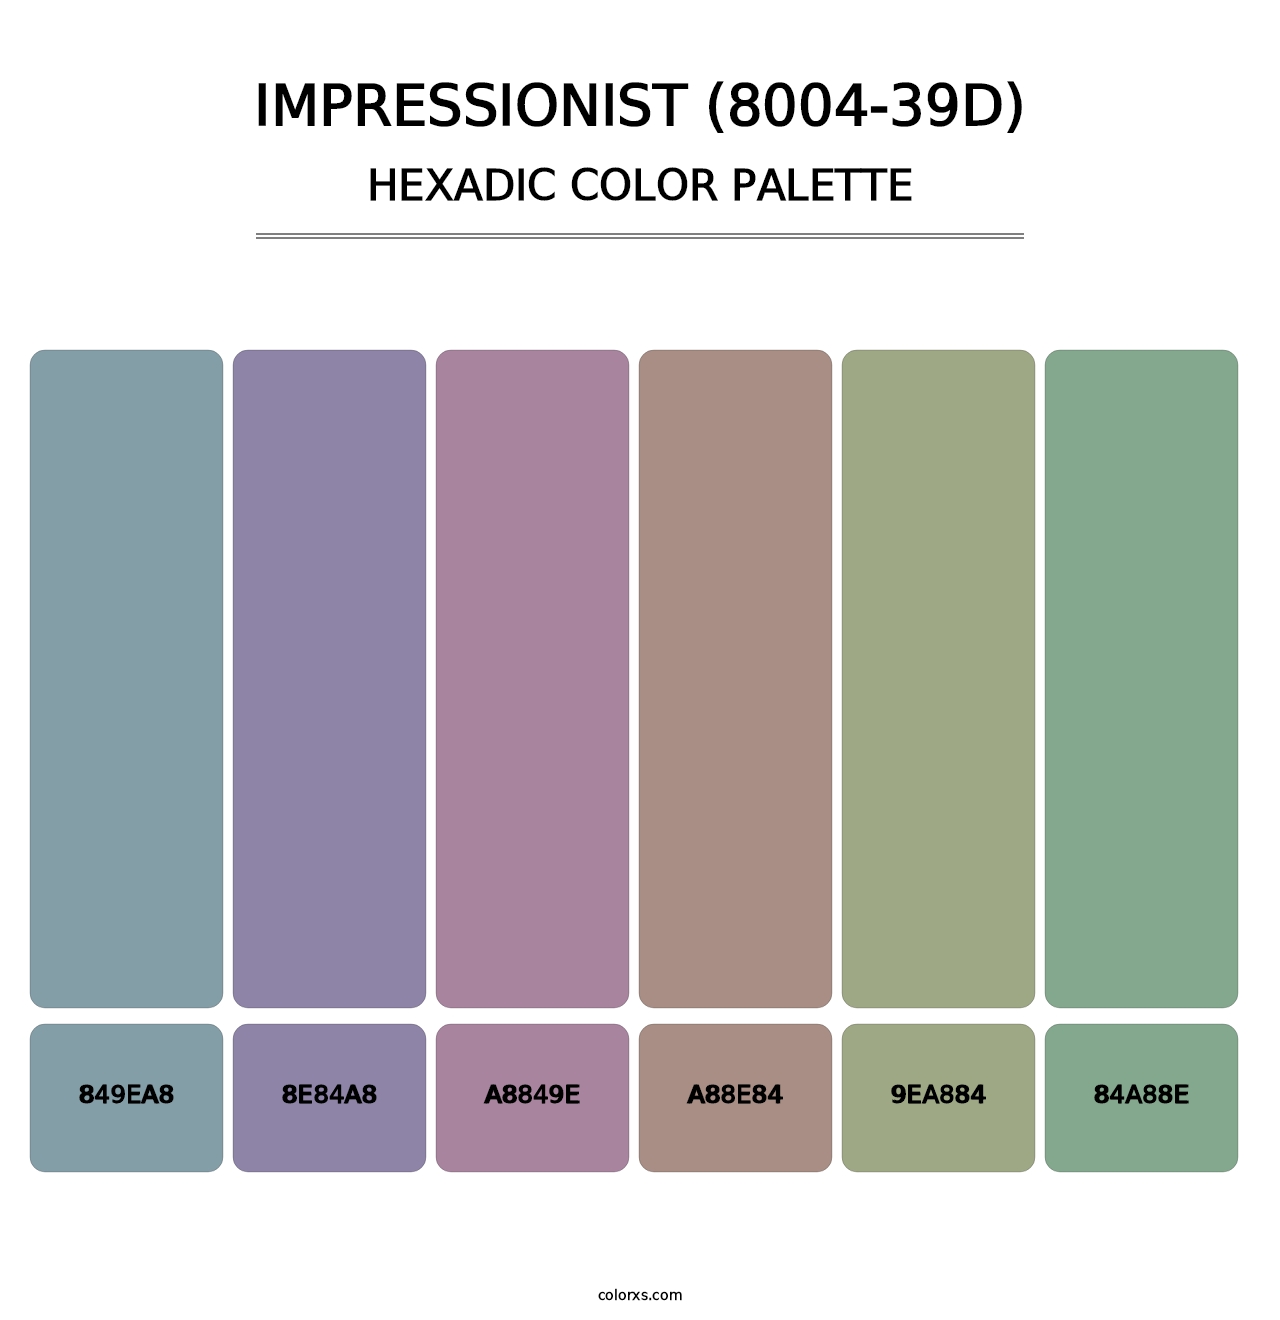 Impressionist (8004-39D) - Hexadic Color Palette